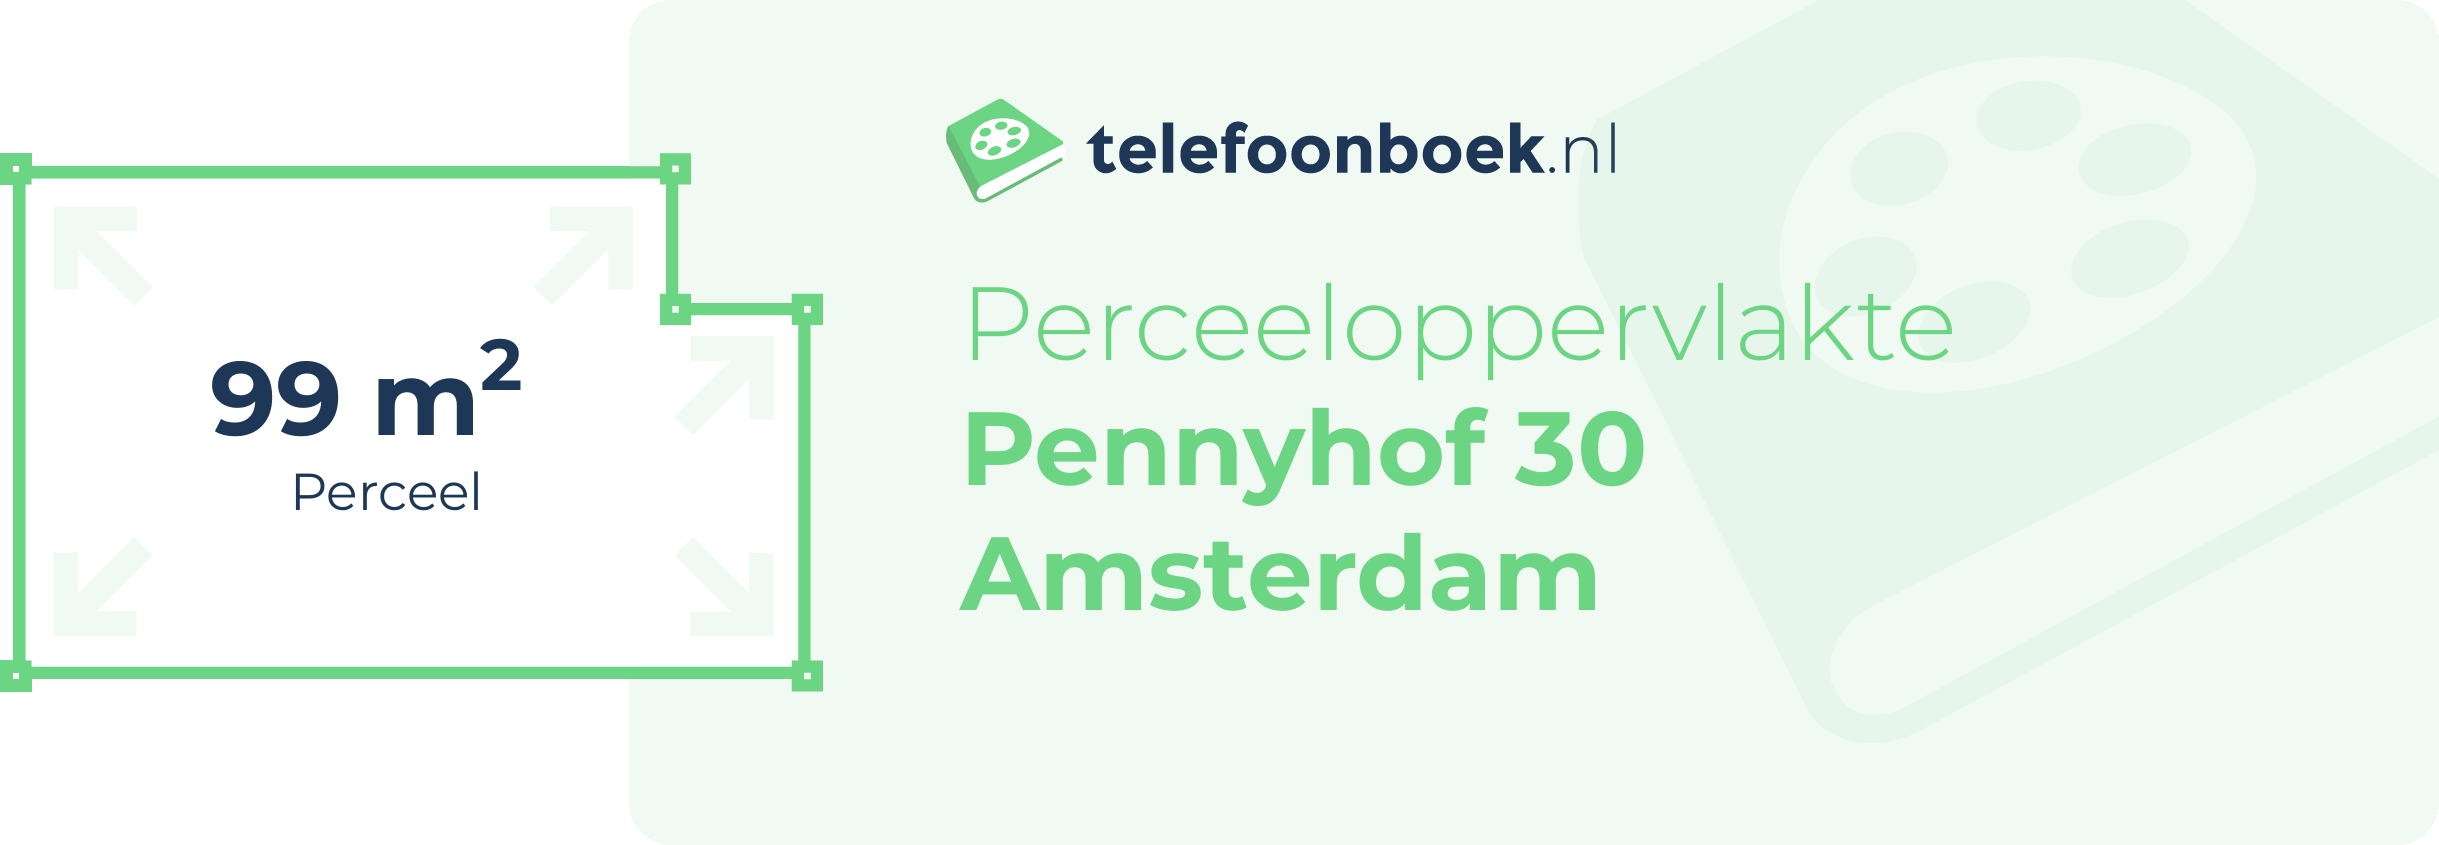 Perceeloppervlakte Pennyhof 30 Amsterdam